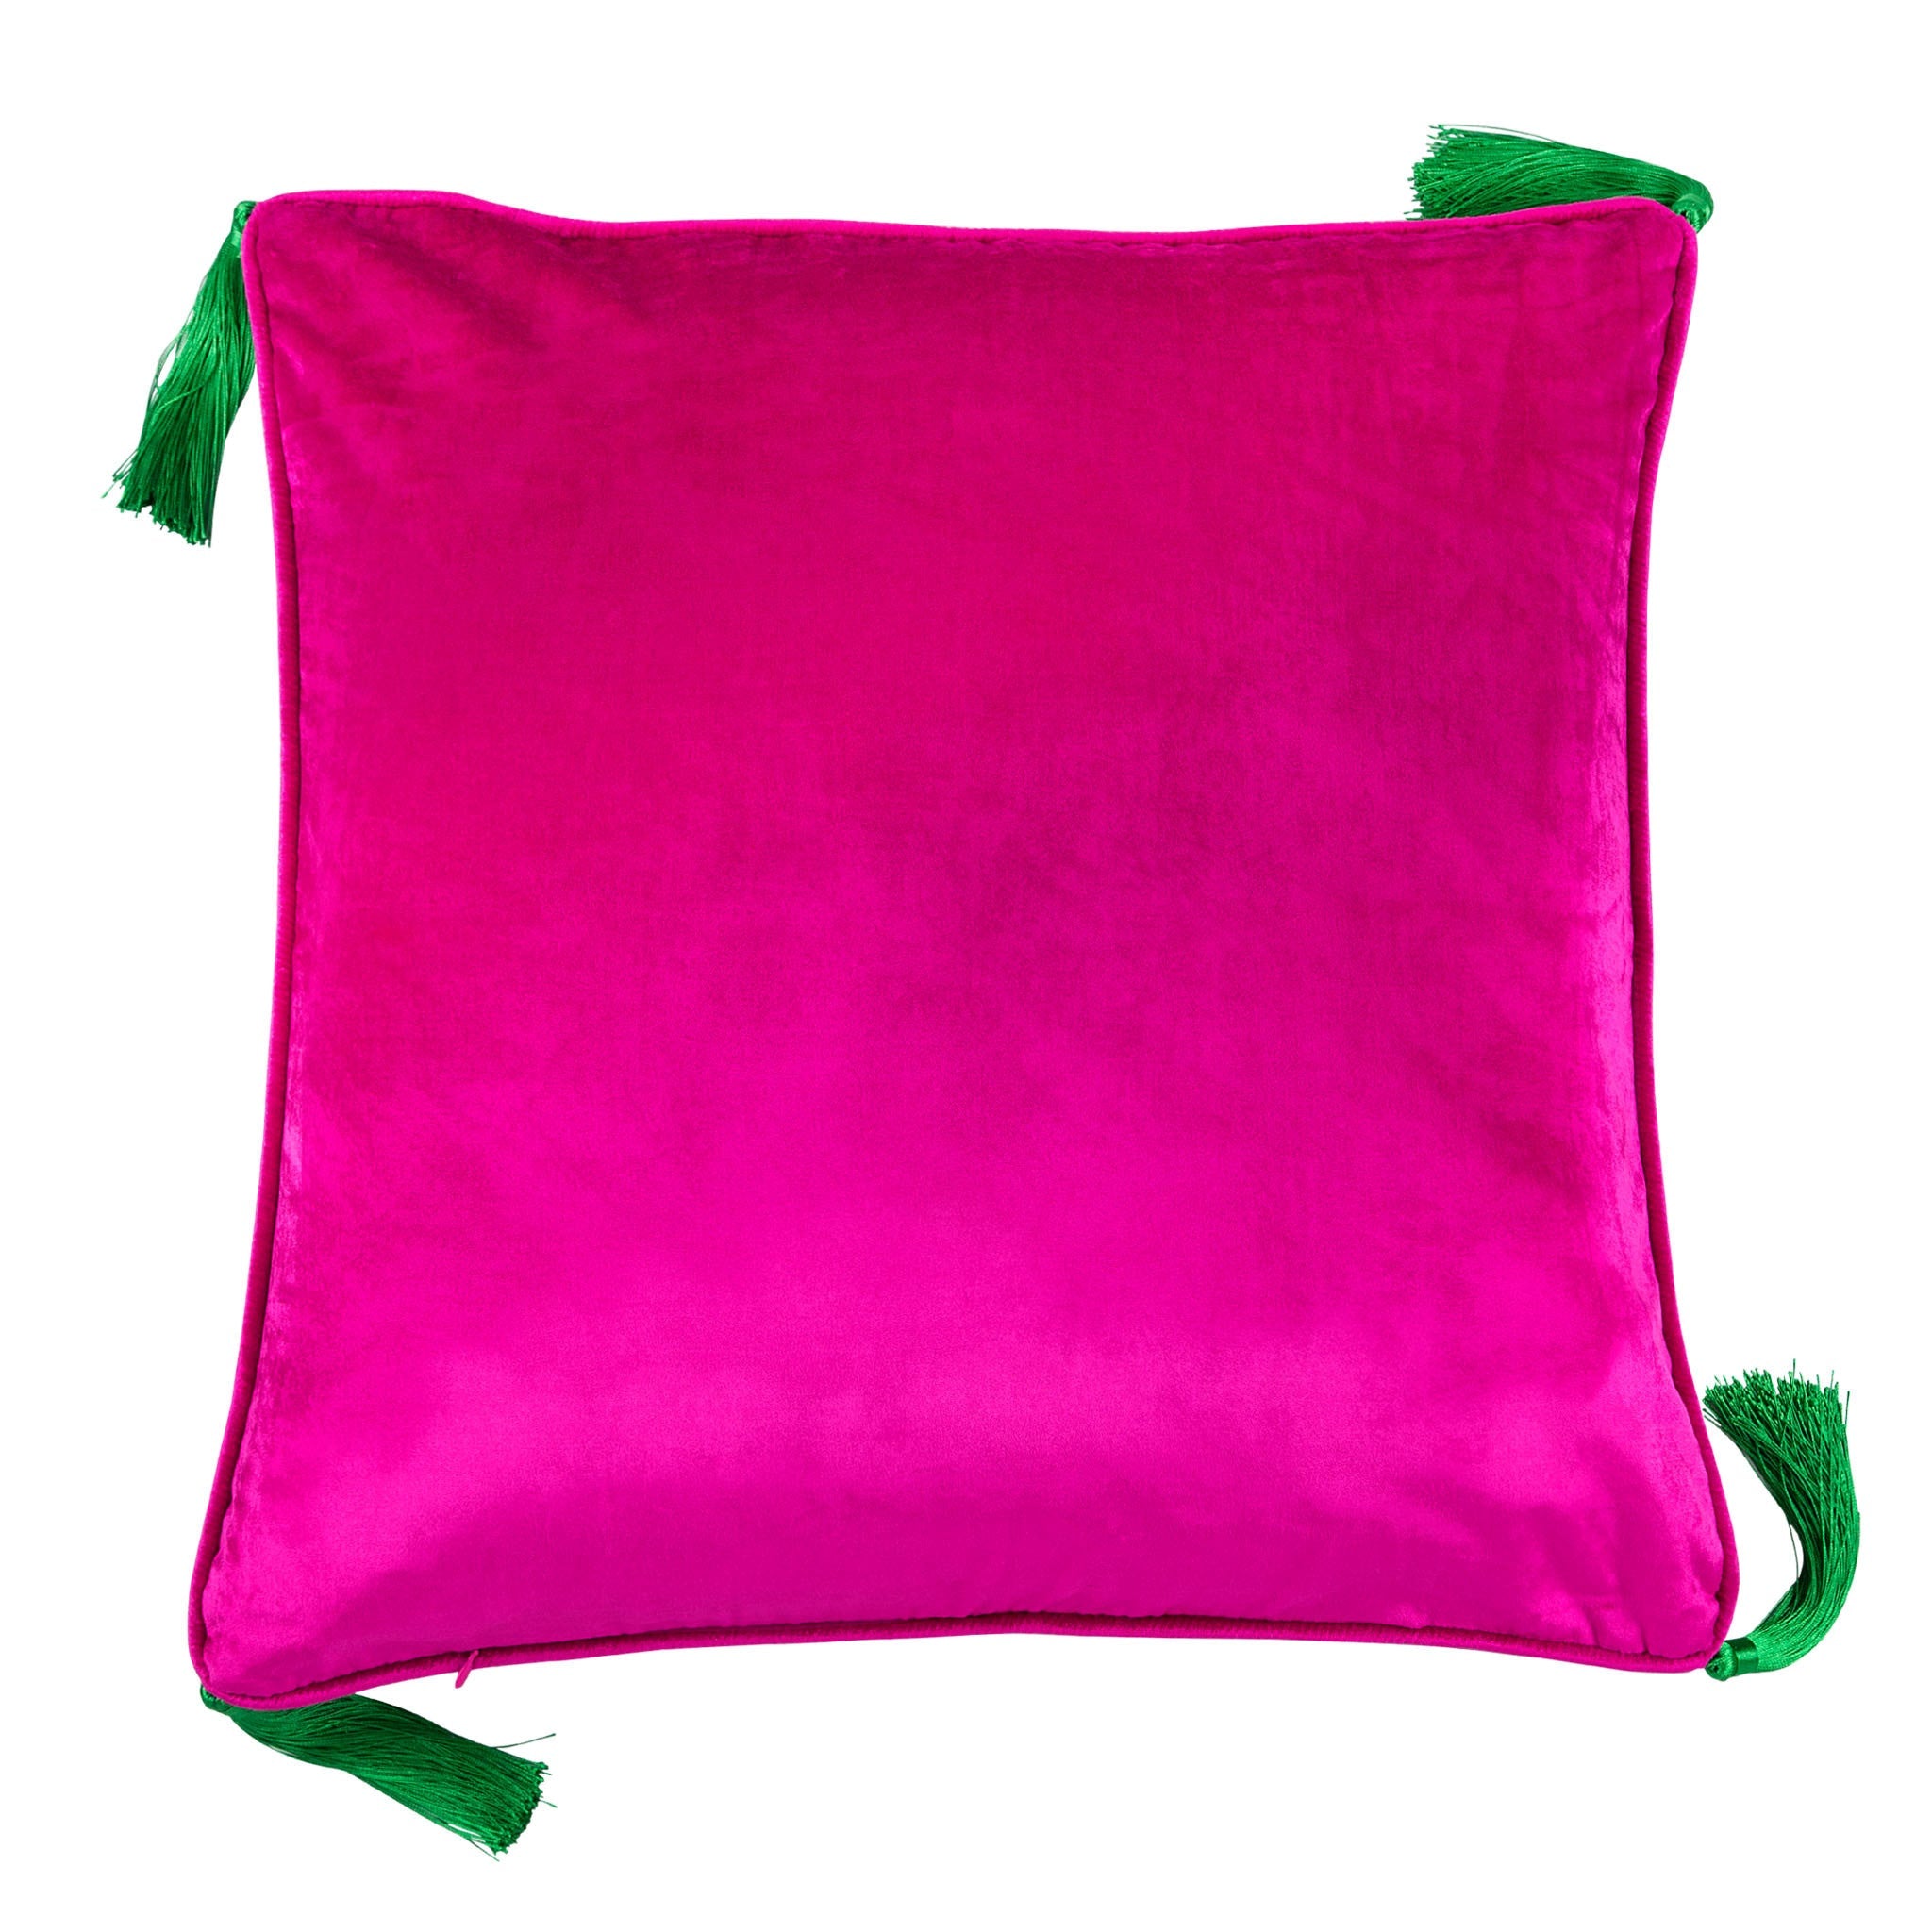 Zellige Ispahan Large Silk Cushion with green tassels